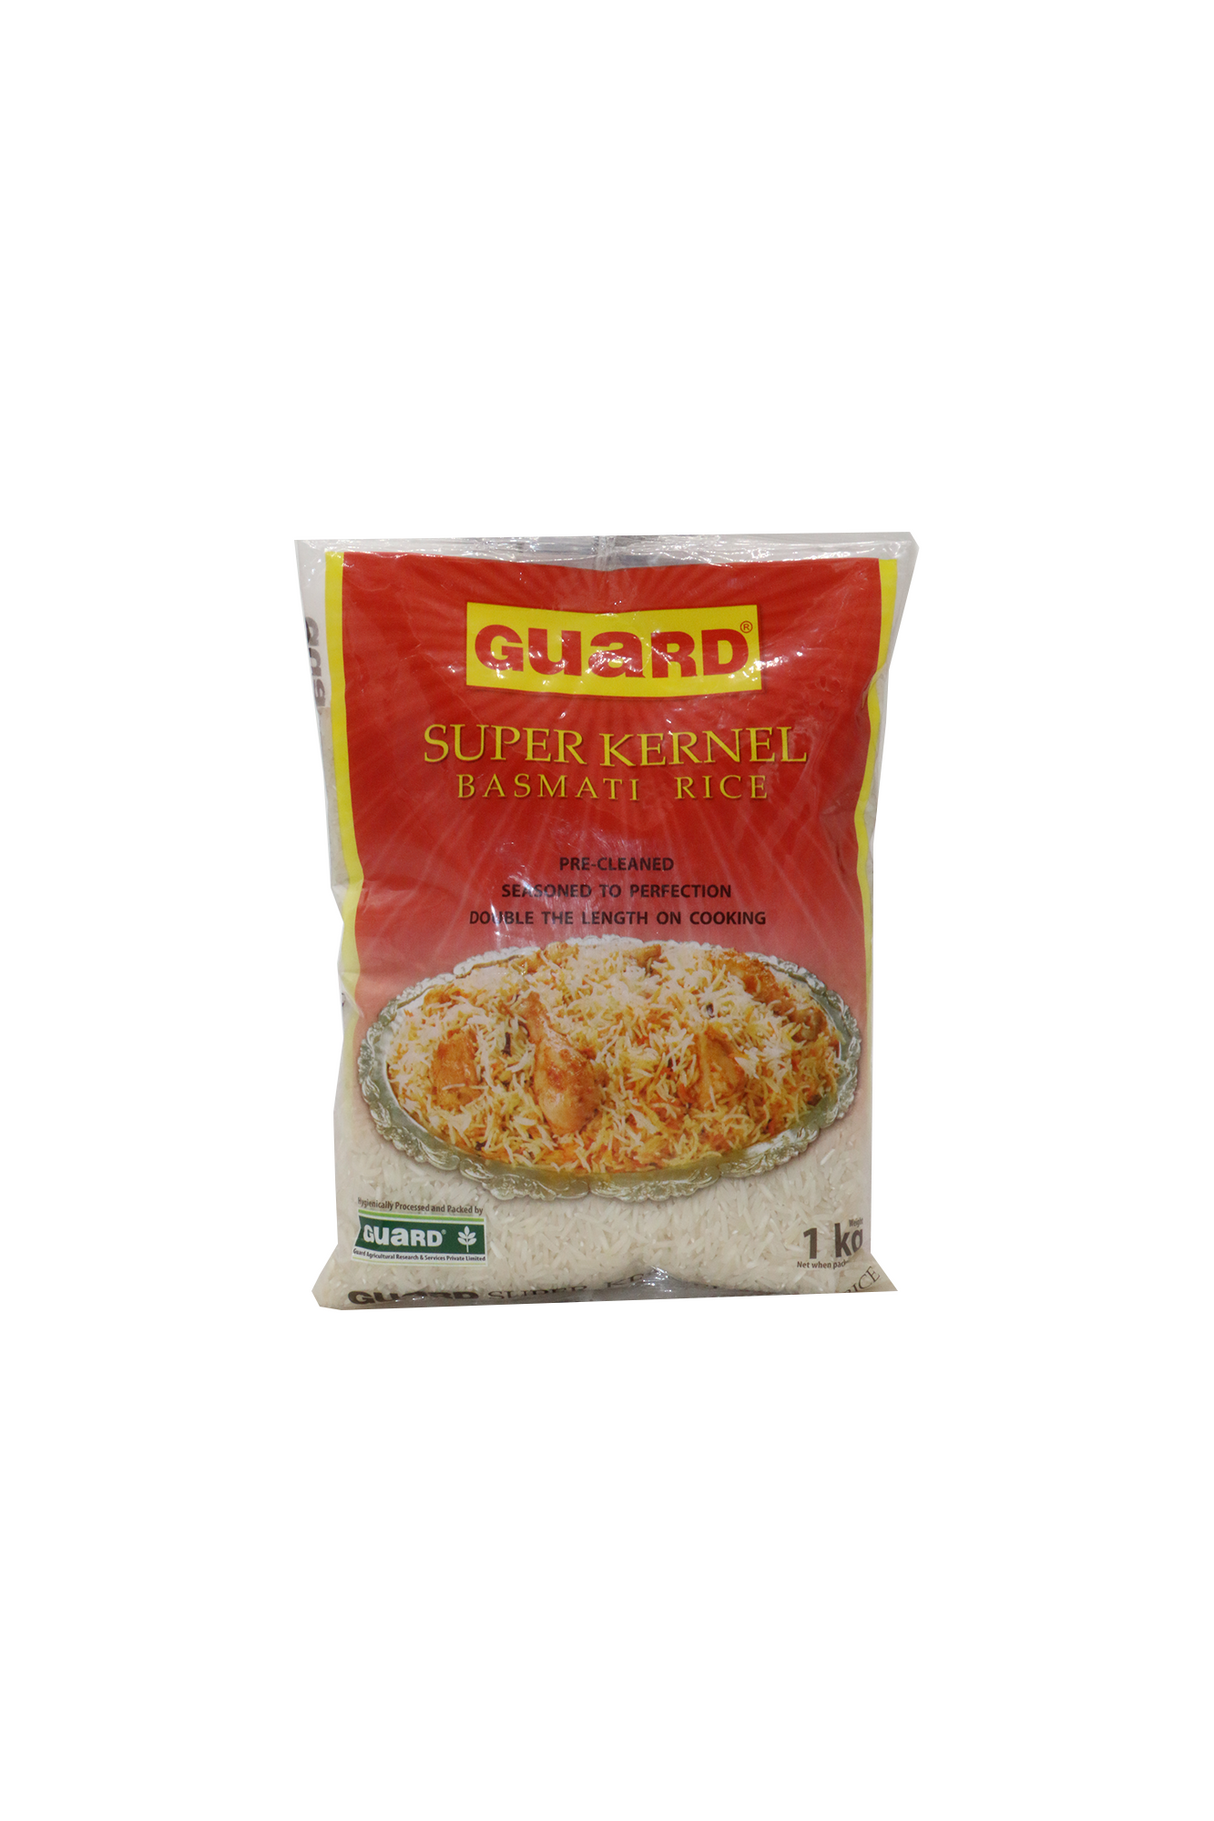 guard super kernel basmati rice 1kg